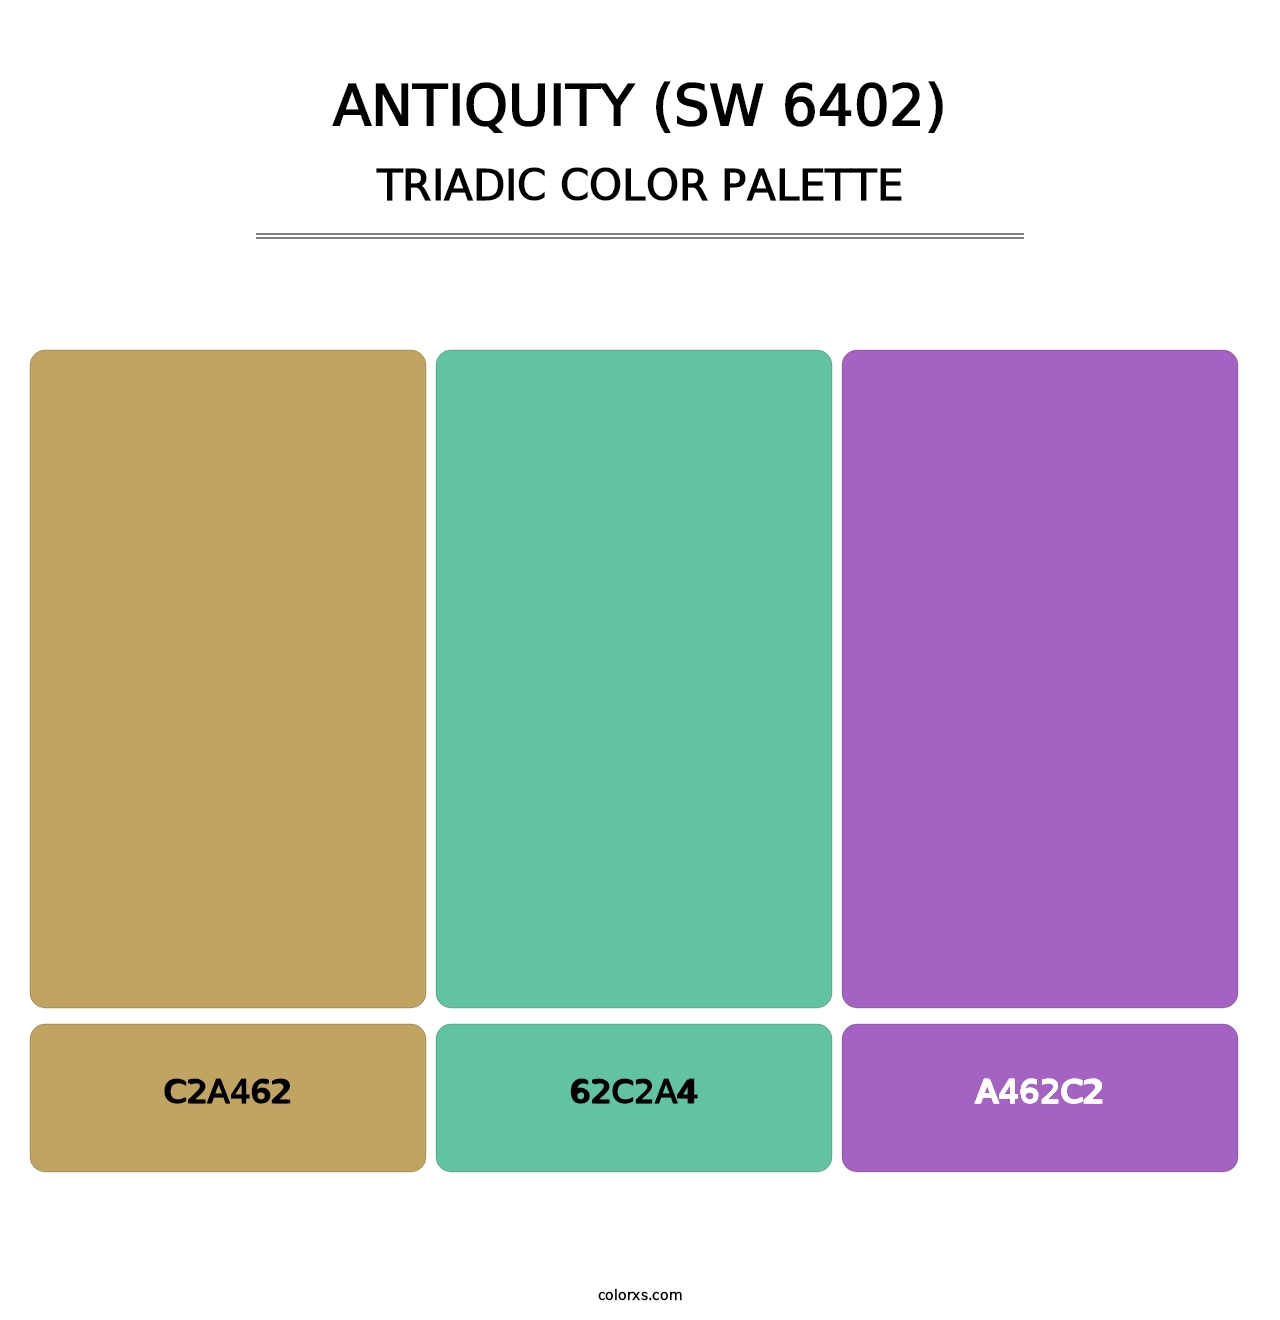 Antiquity (SW 6402) - Triadic Color Palette